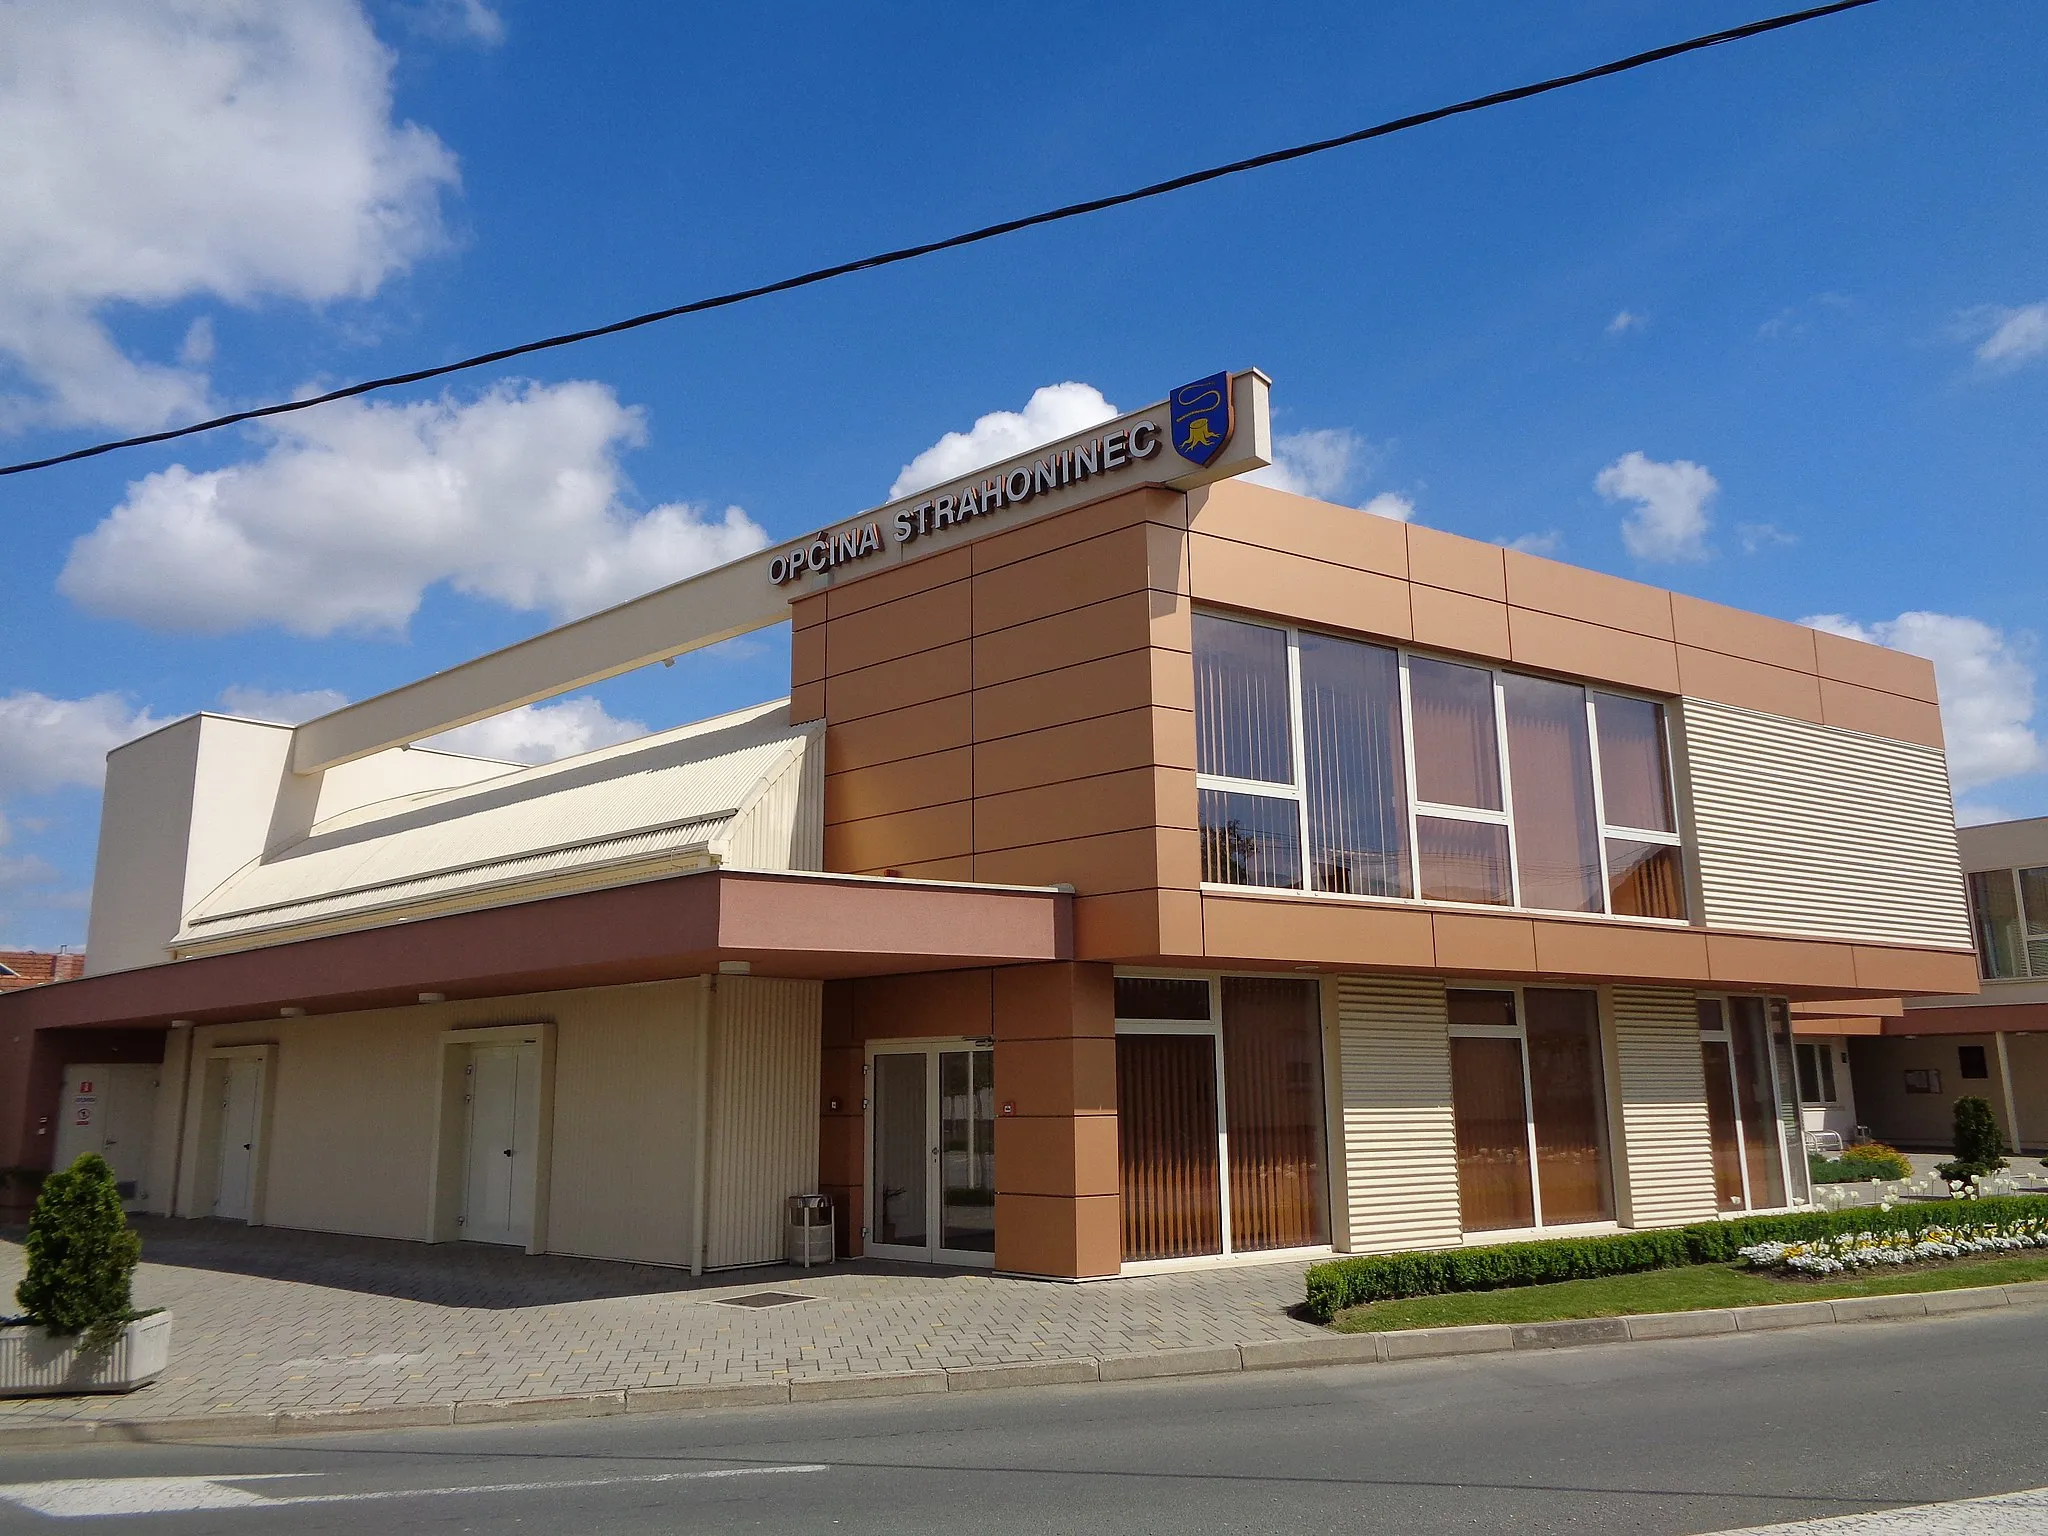 Photo showing: Strahoninec, Medjimurje County, Croatia - Municipal building